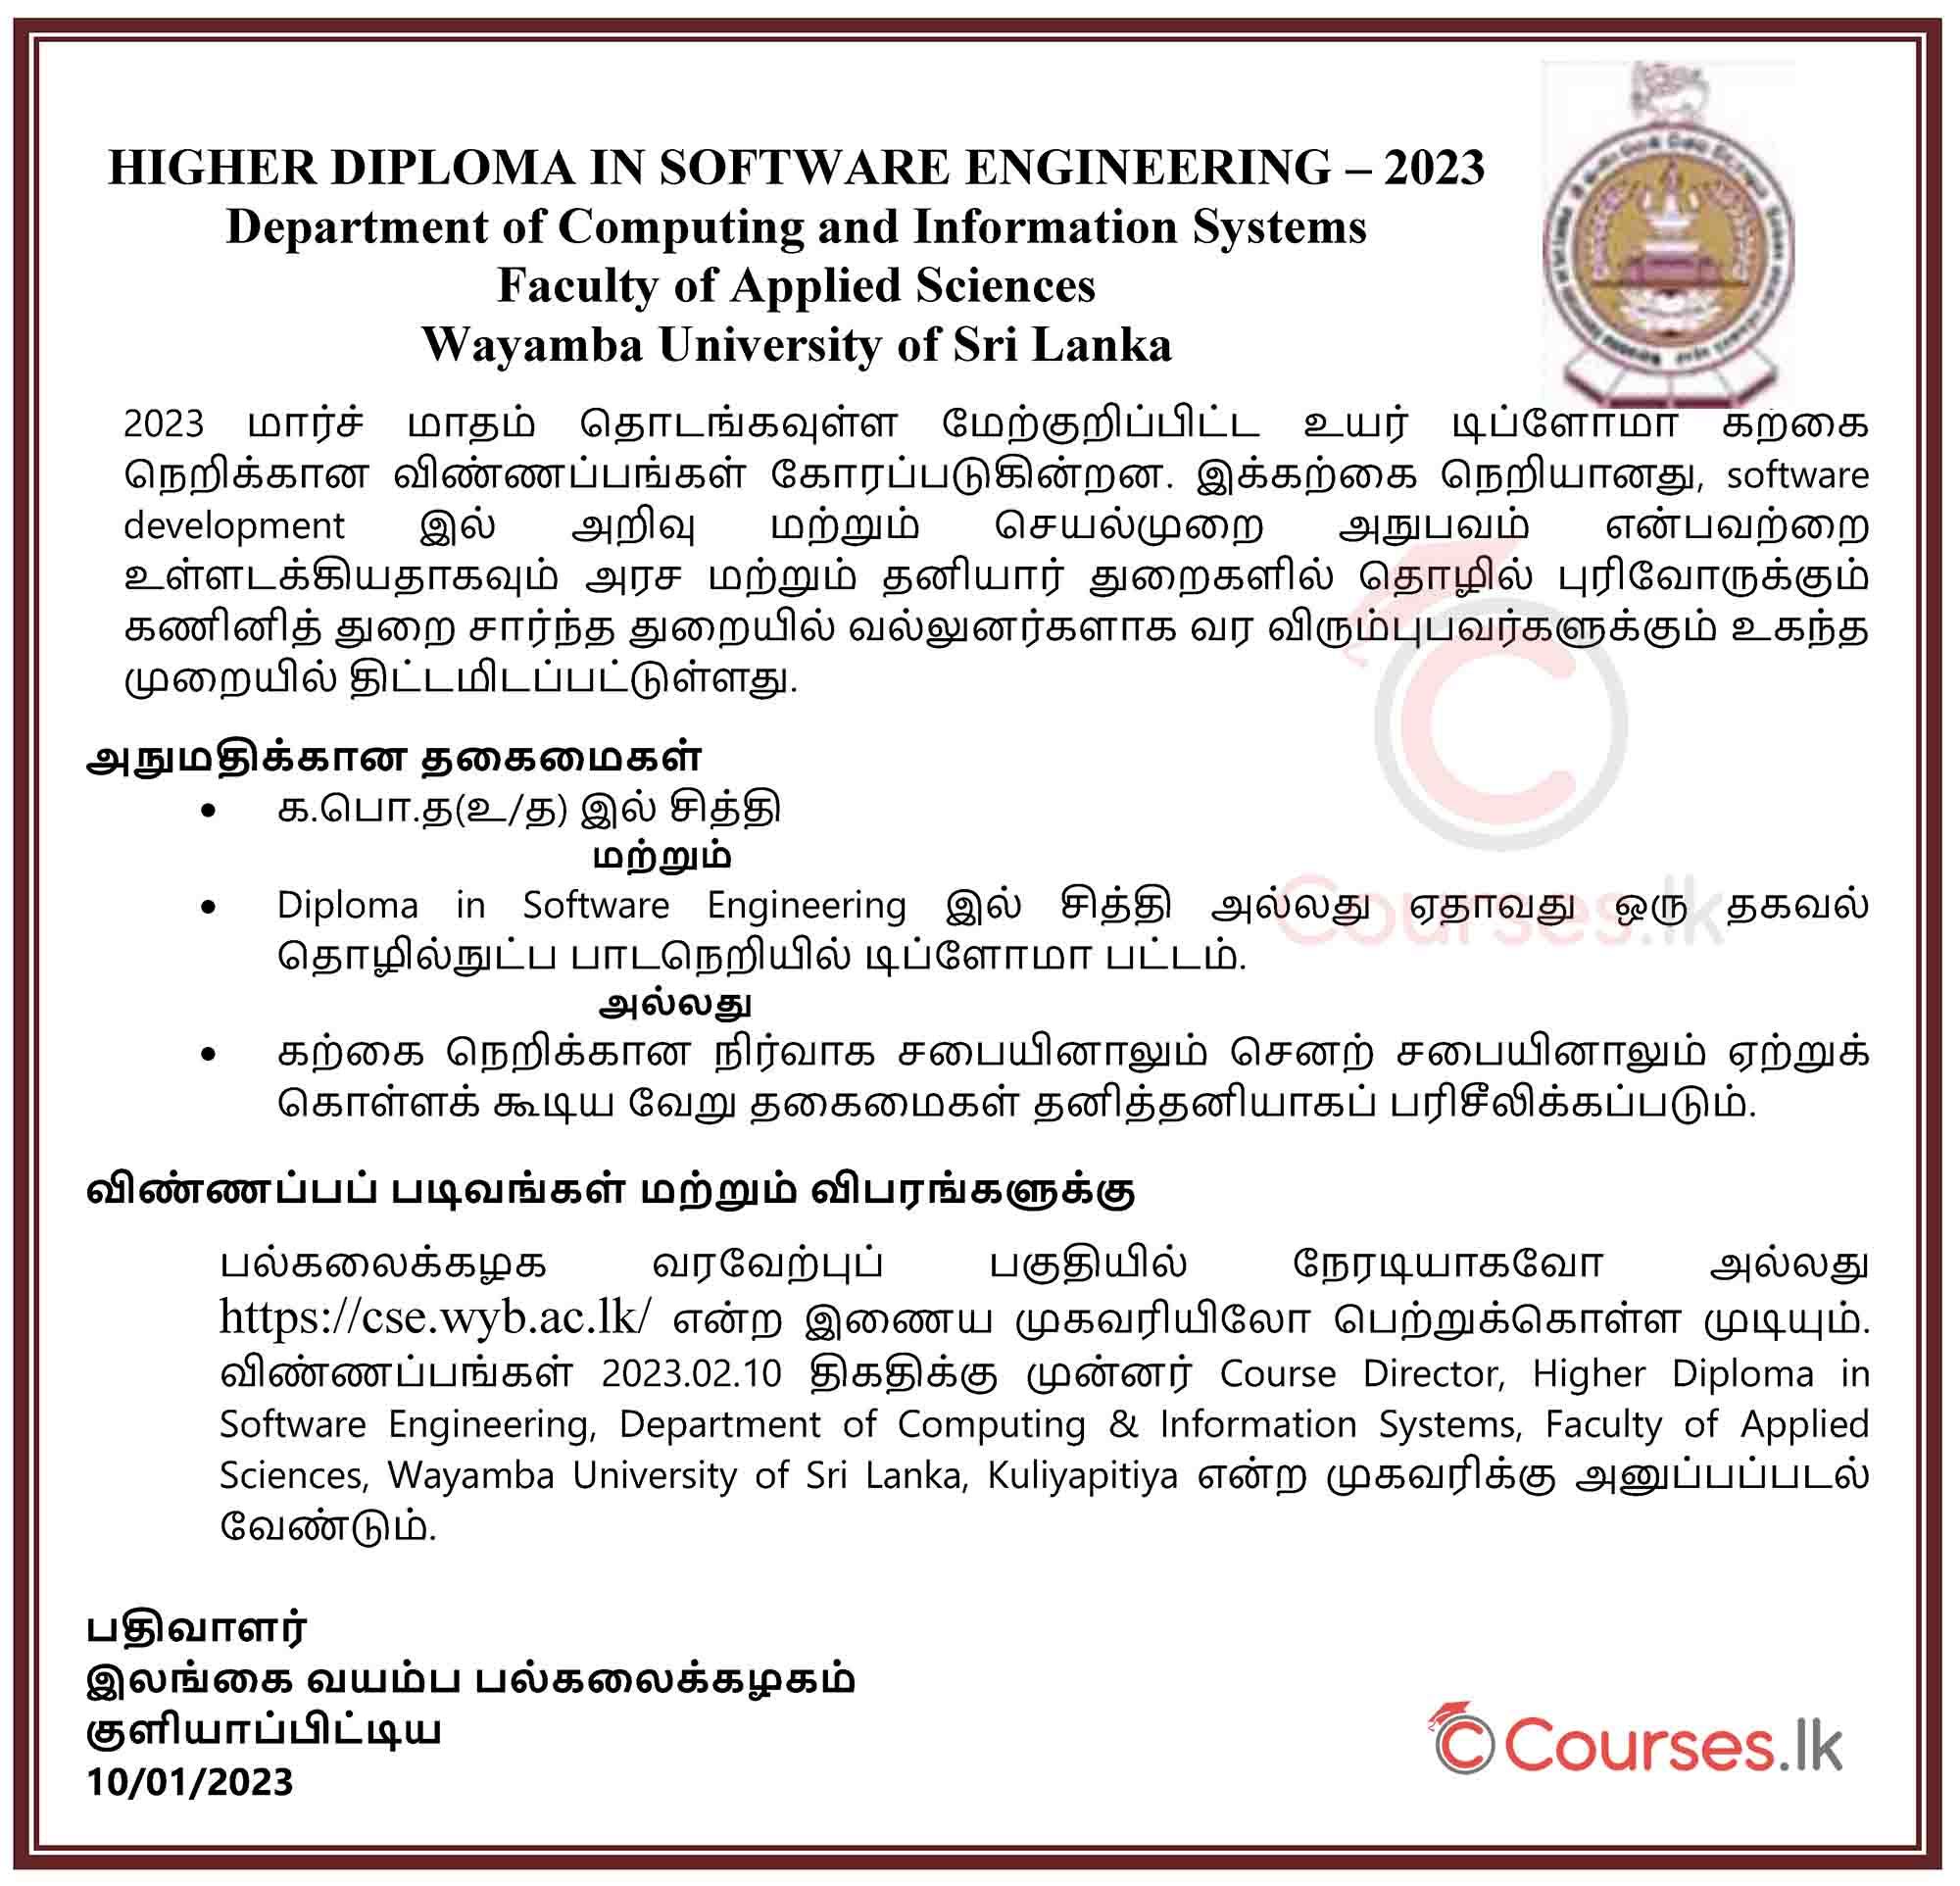 Higher Diploma in Software Engineering (HDSE) 2023 - Wayamba University of Sri Lanka